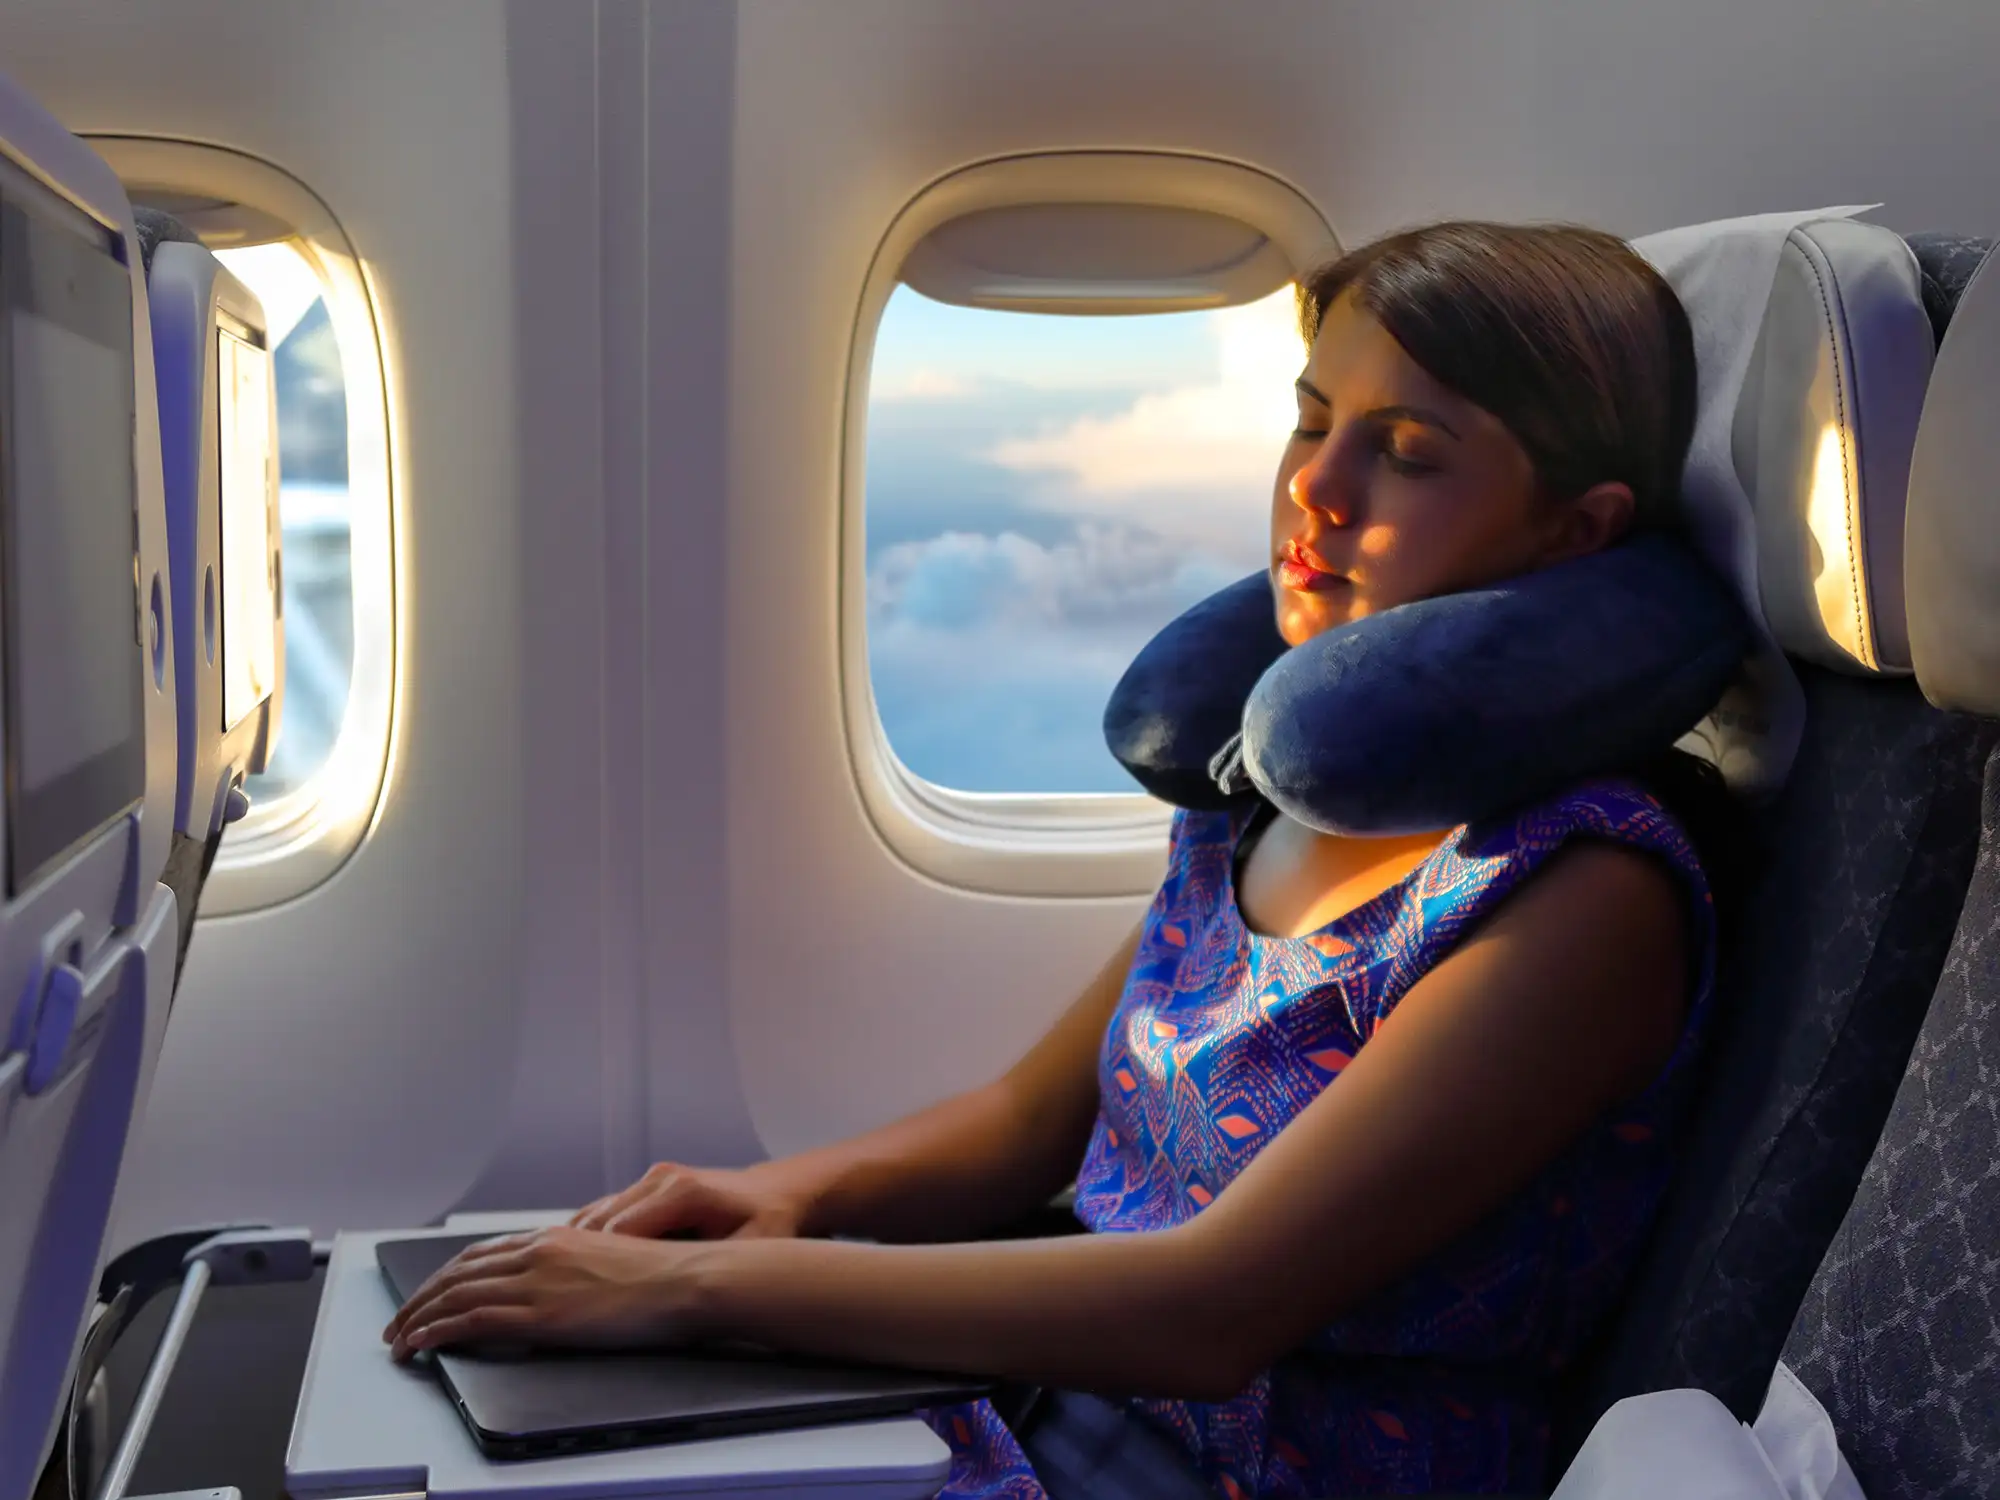 https://www.smartertravel.com/wp-content/webp-express/webp-images/doc-root/wp-content/uploads/2018/11/neck-pillow-flight-woman-sleep.jpg.webp